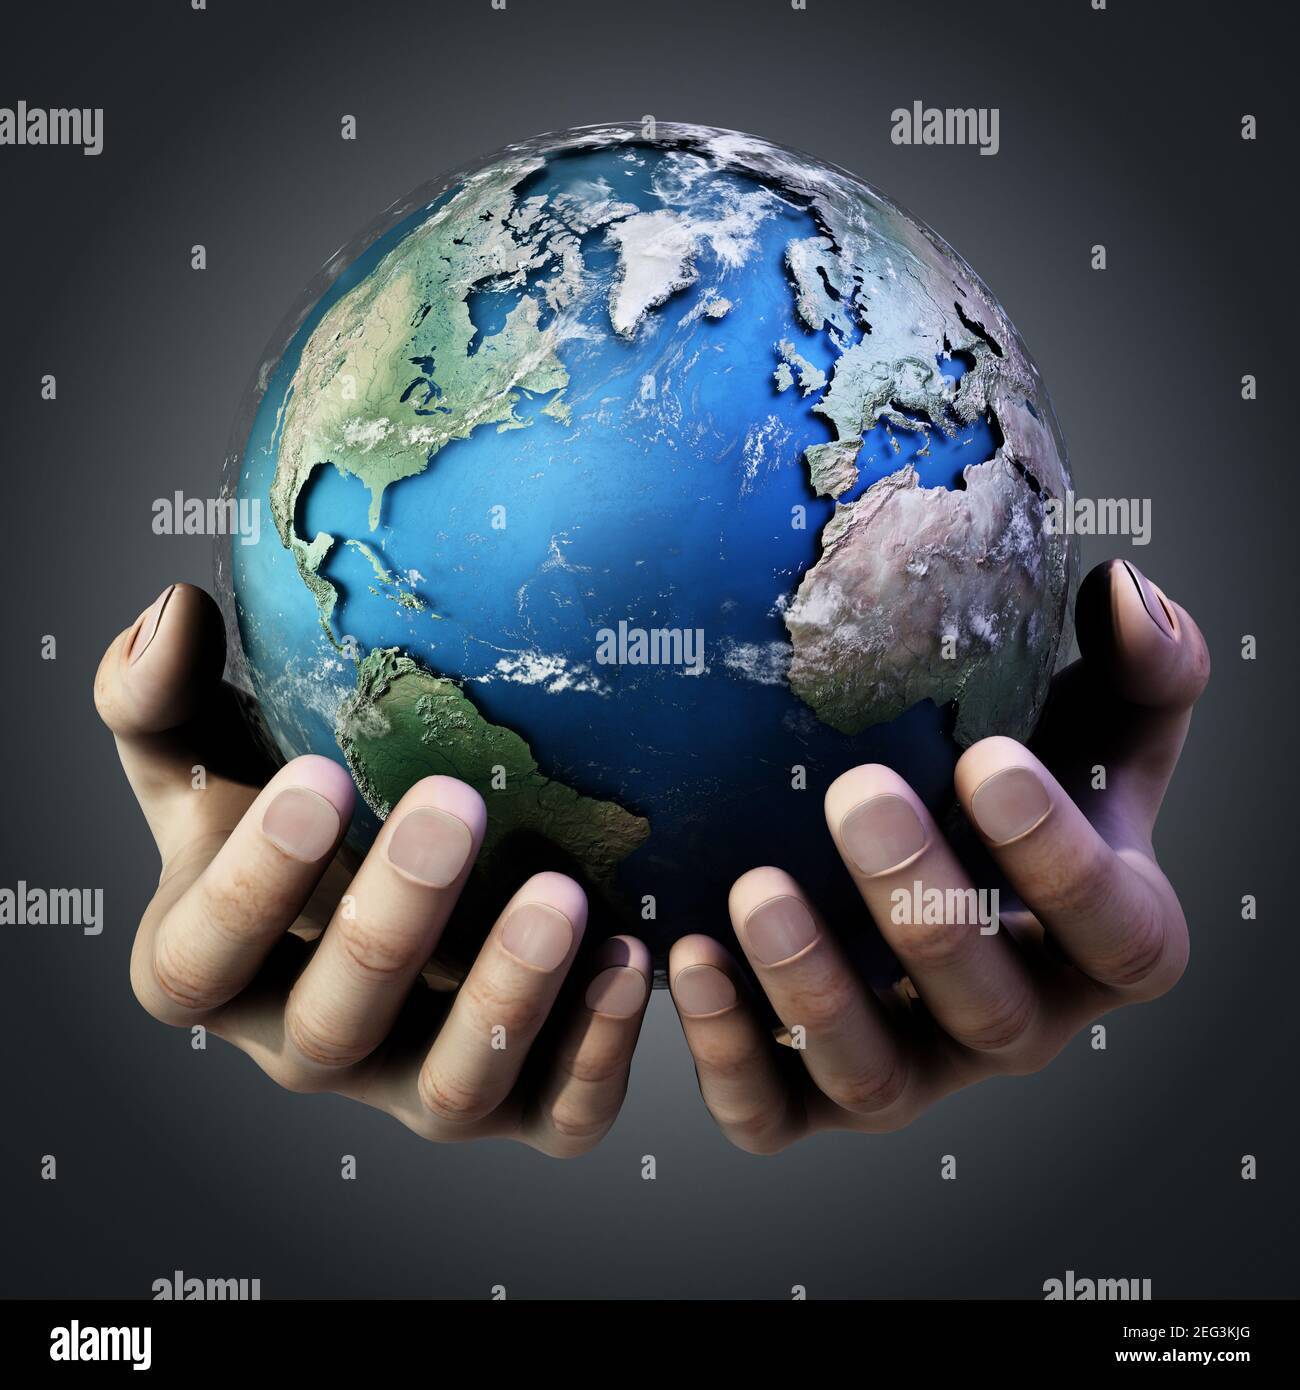 Hands holding a globe against dark background. 3D illustration. Stock Photo